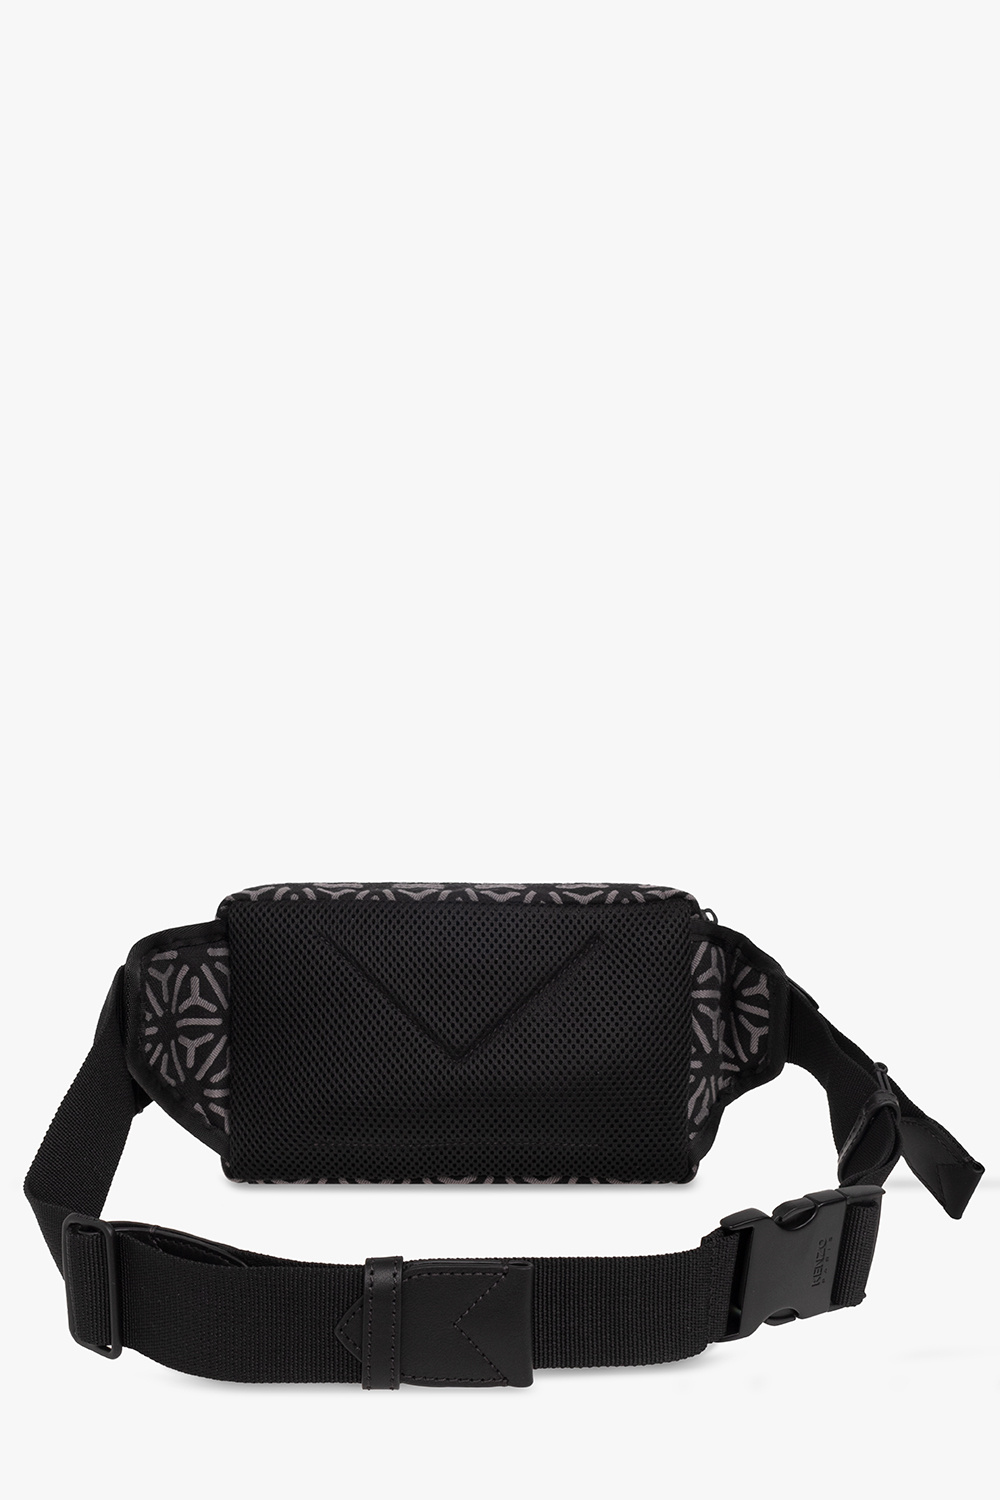 Kenzo Belt Charcoal bag